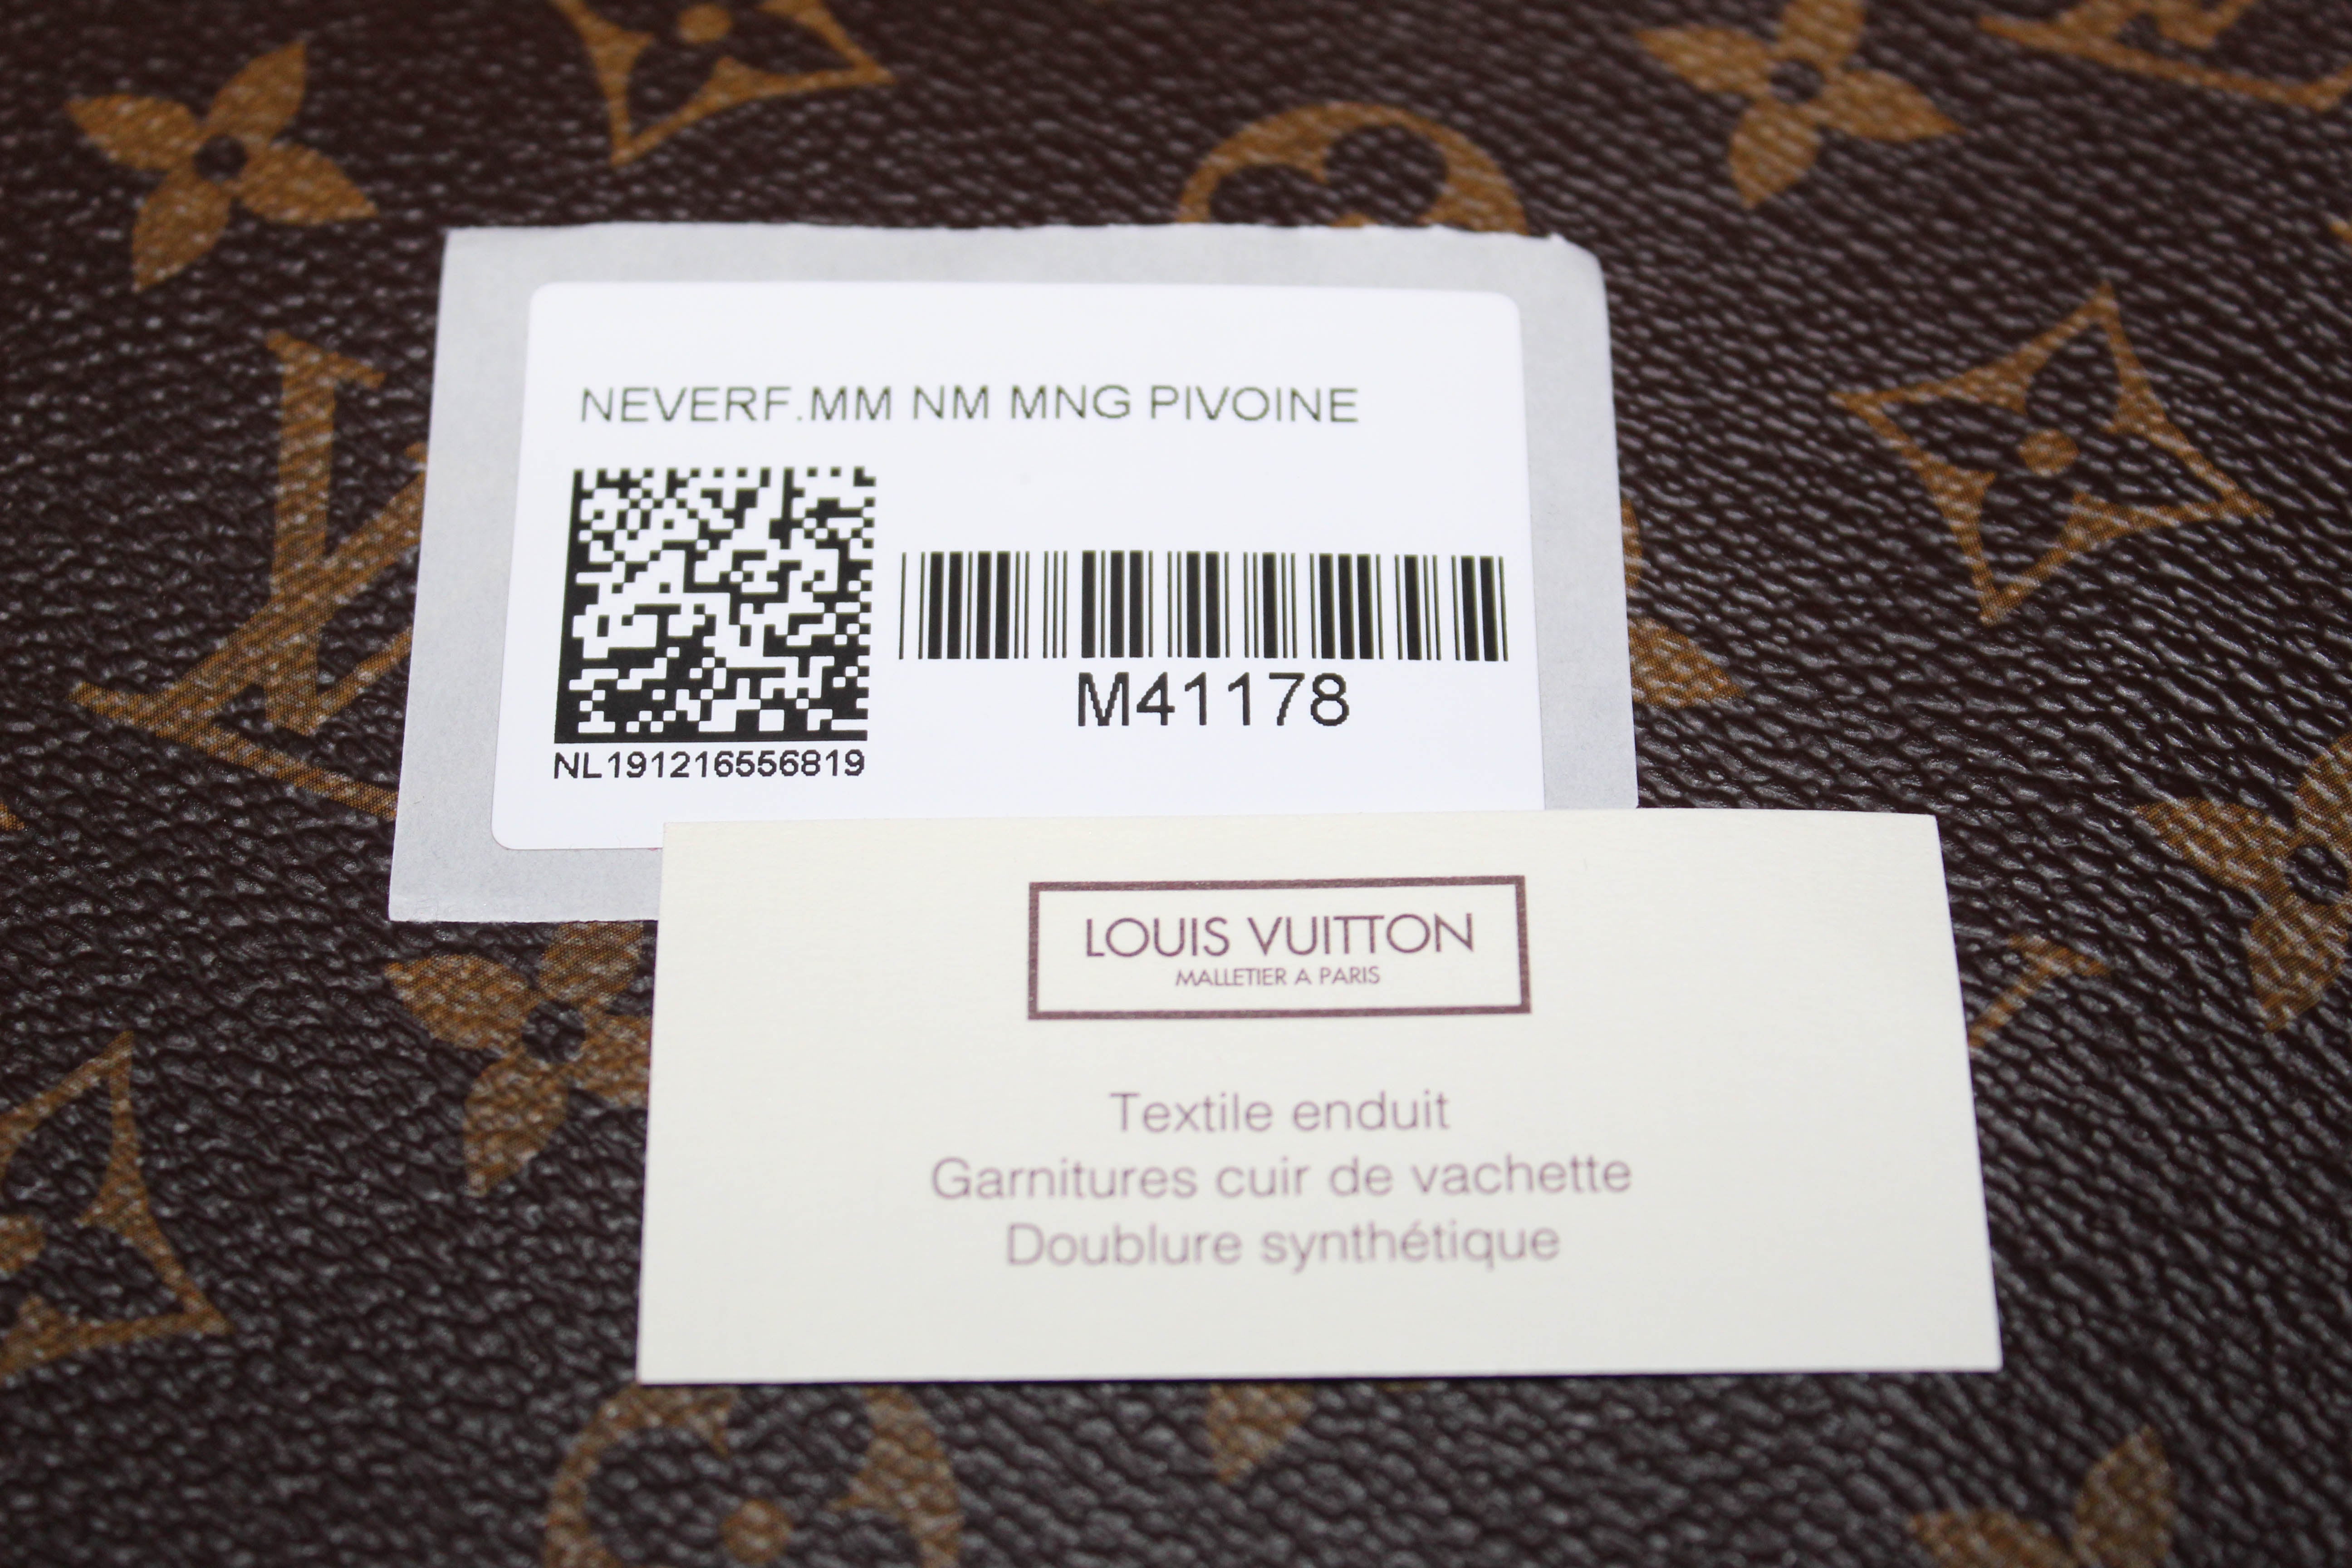 Louis Vuitton Neverfull Size mm Pivoine M41178 Monogram